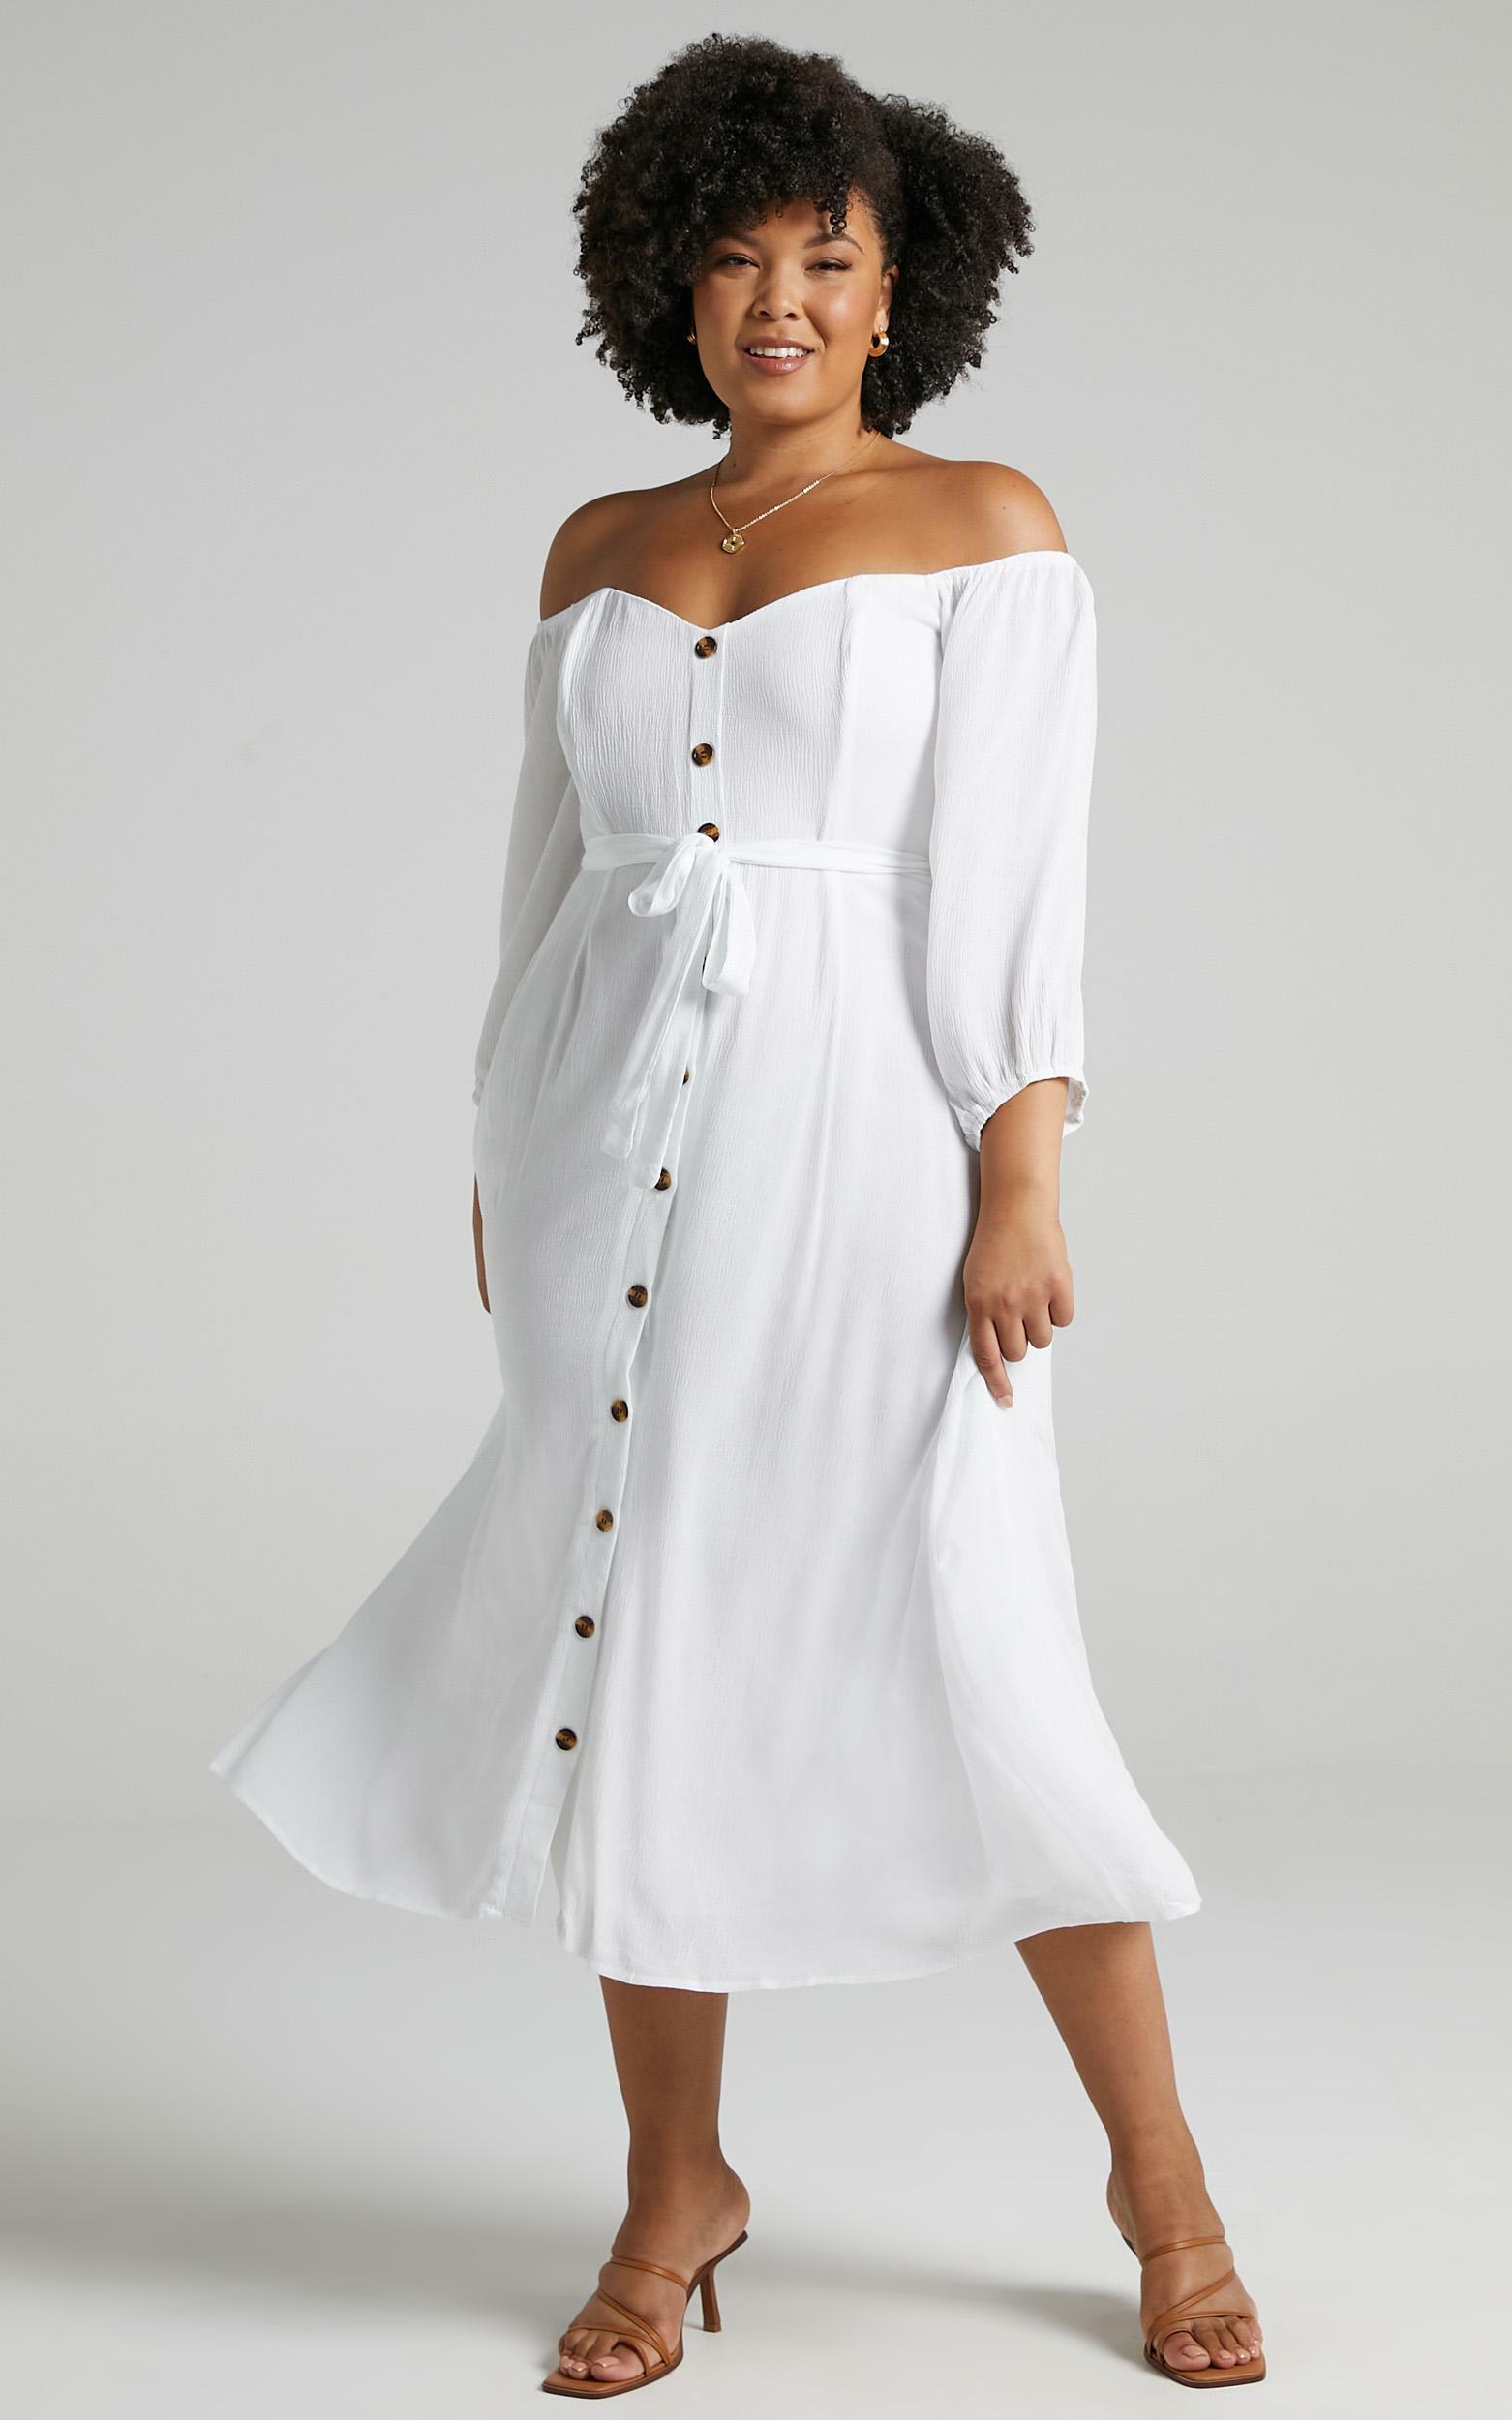 Sorrento Dreaming Dress in White Linen Look | Showpo